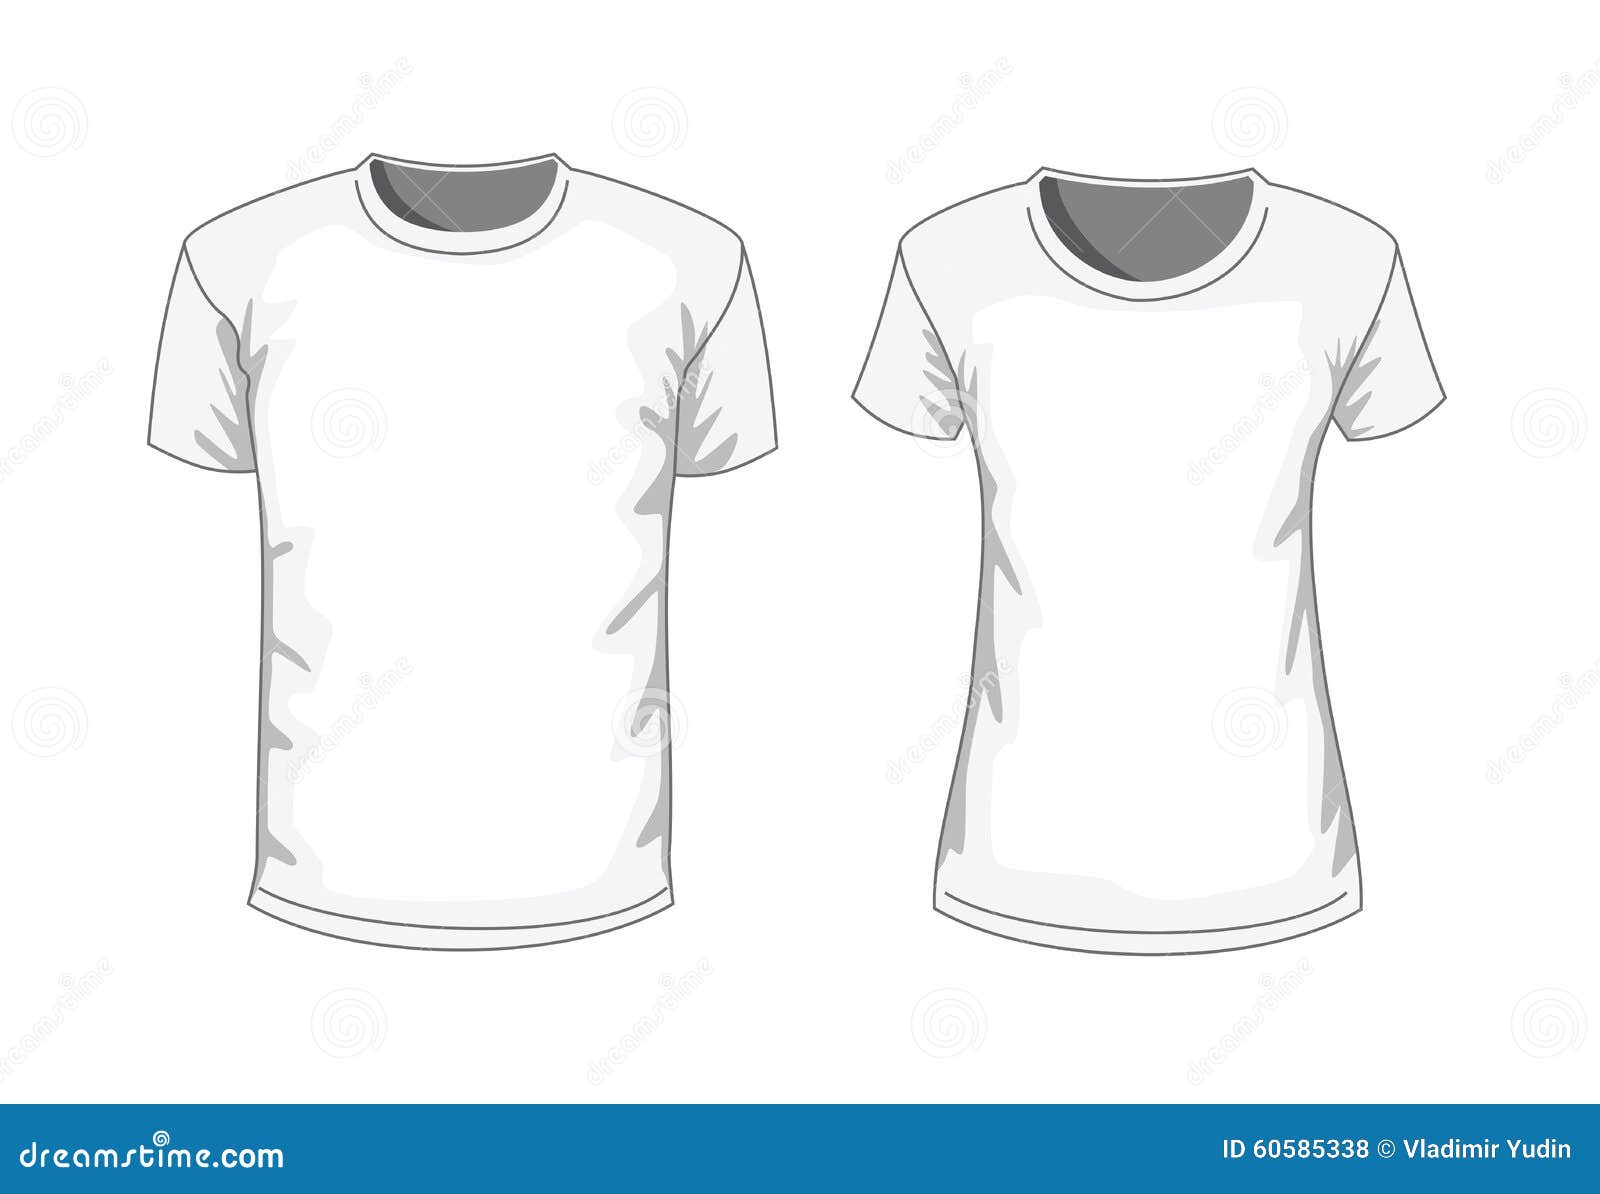 Vector T-shirt Stock Vector - Image: 60585338